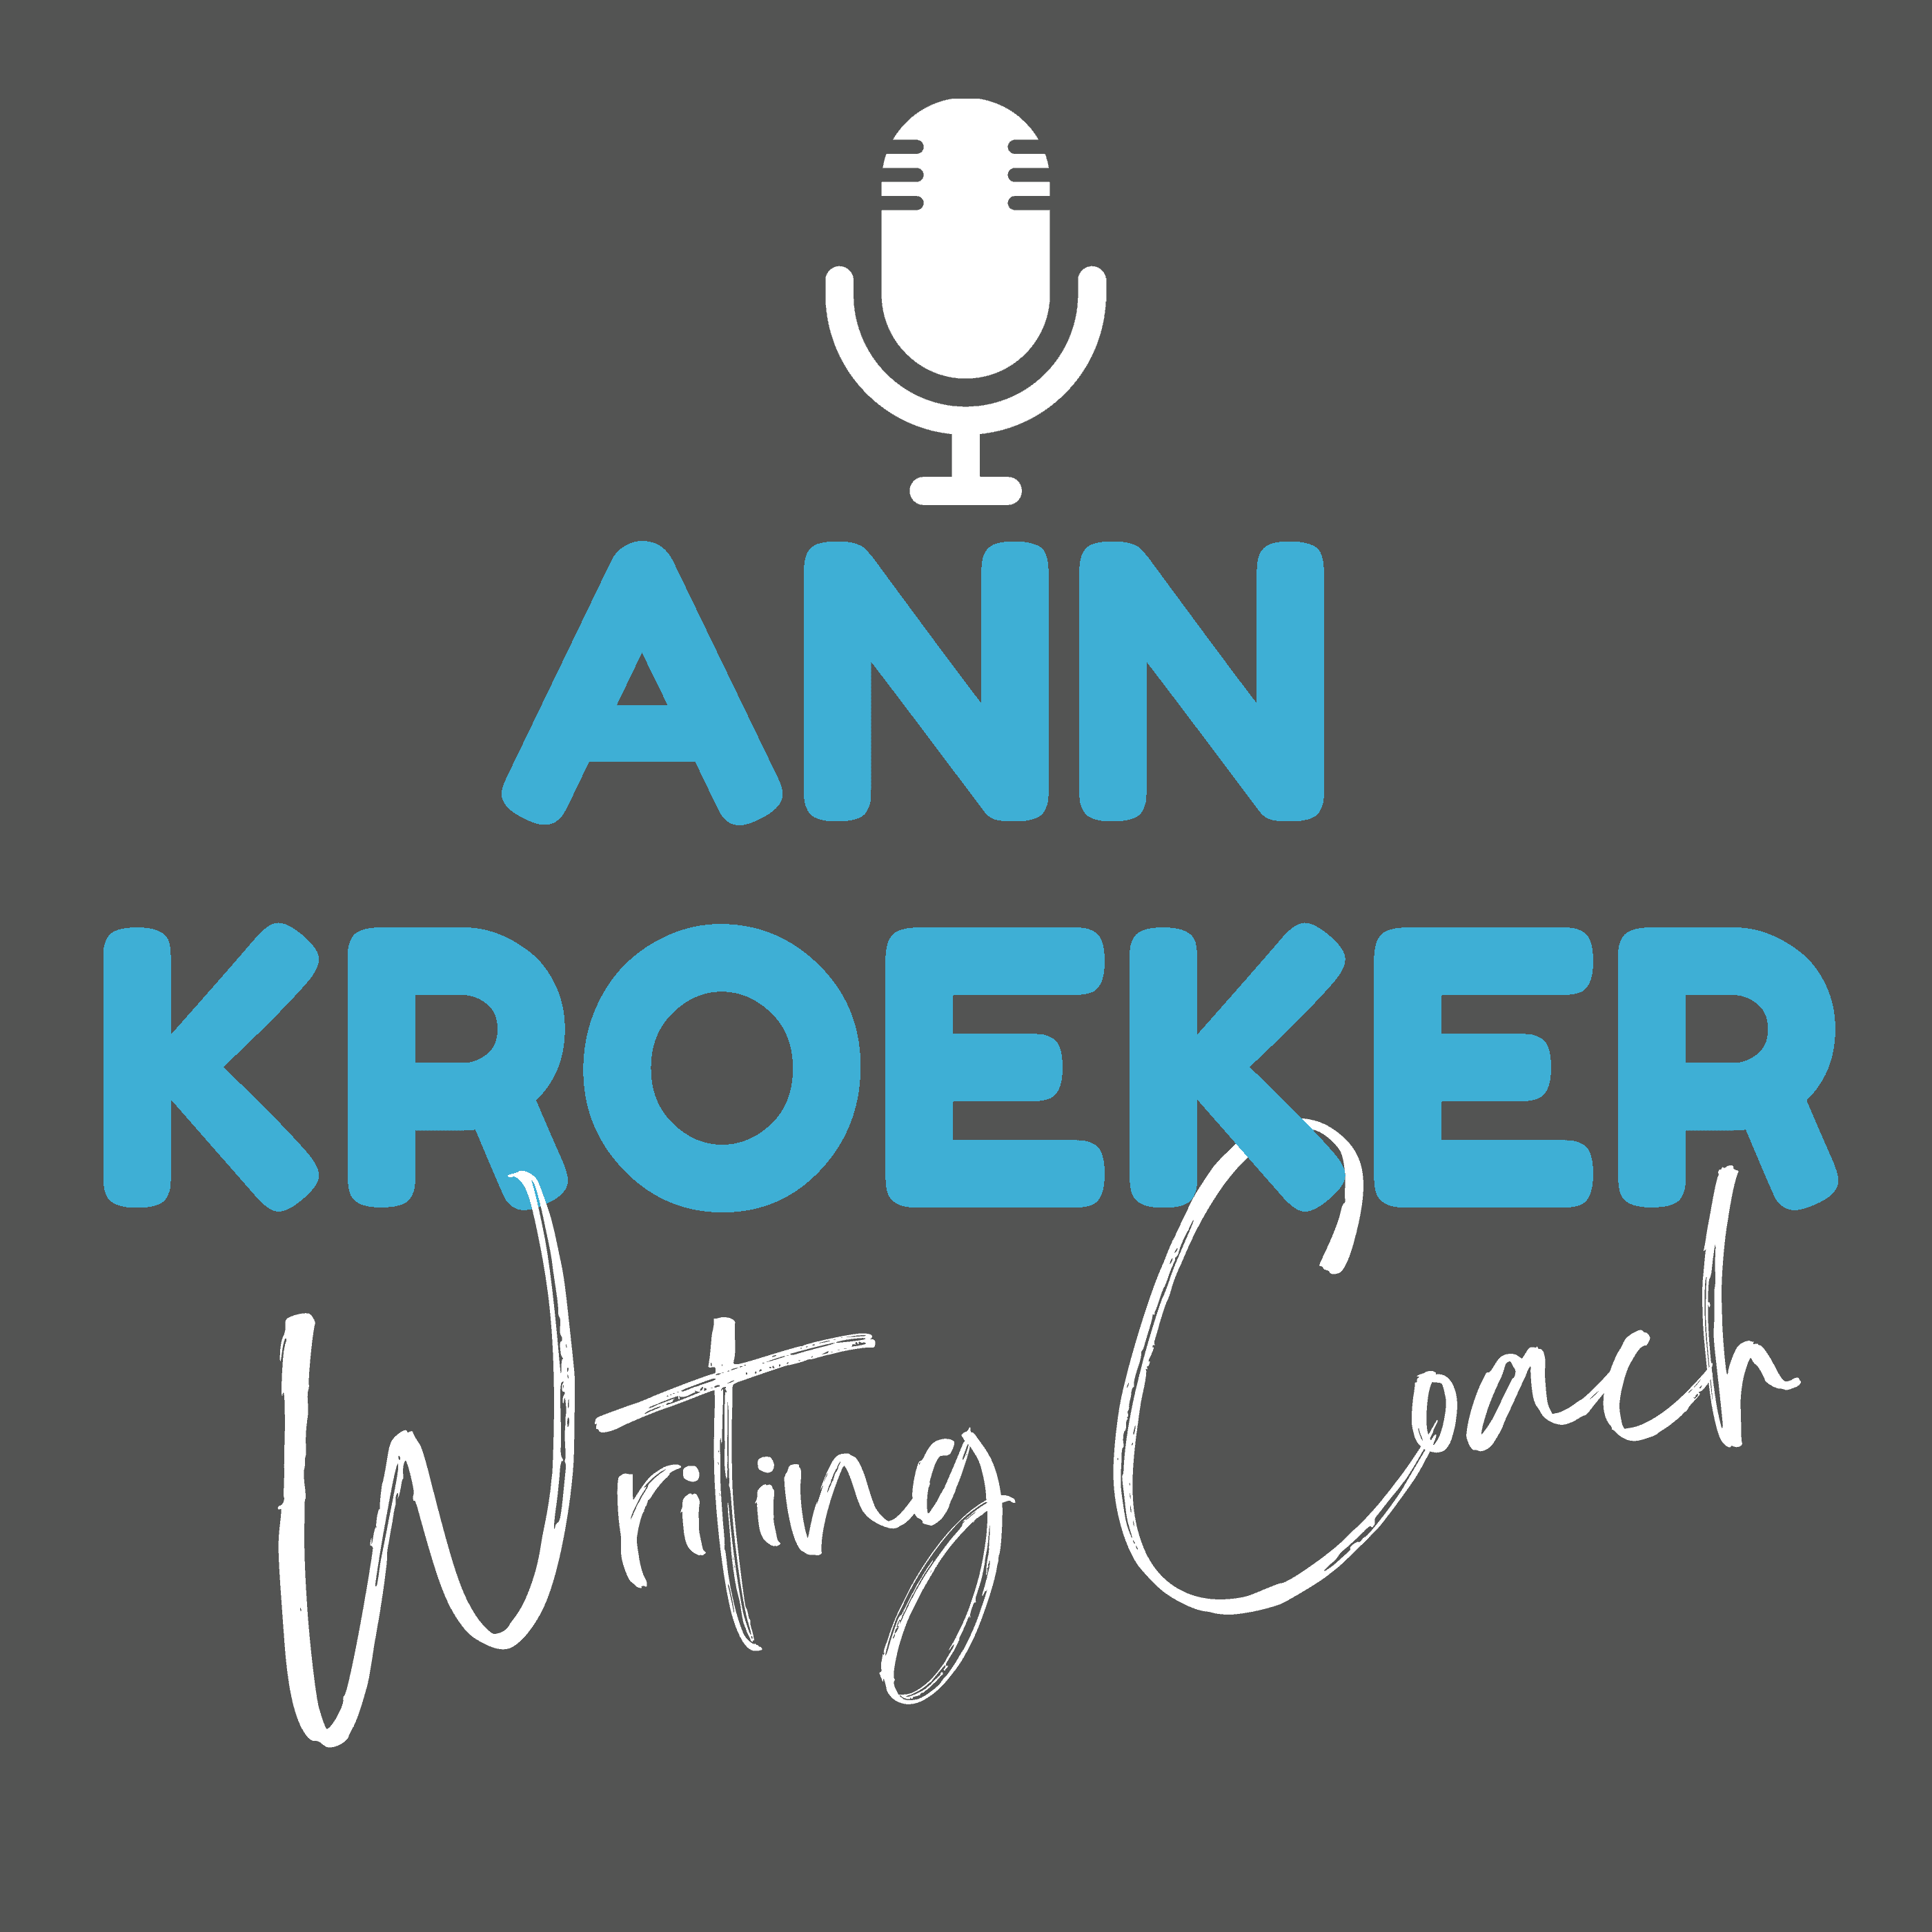 Podcast art show Ann Kroeker as a blue, puffy font, Writing Coach is white, cursive font